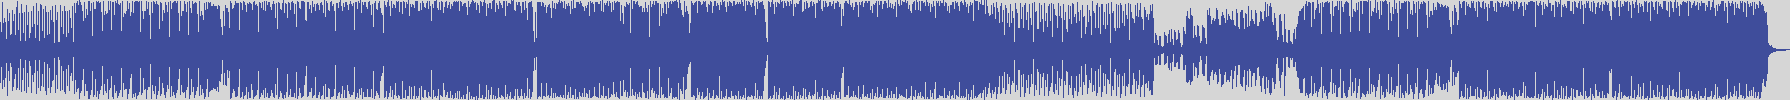 atomic_recordings [AR005] Alex - Sacudelo [Edit Mix] audio wave form